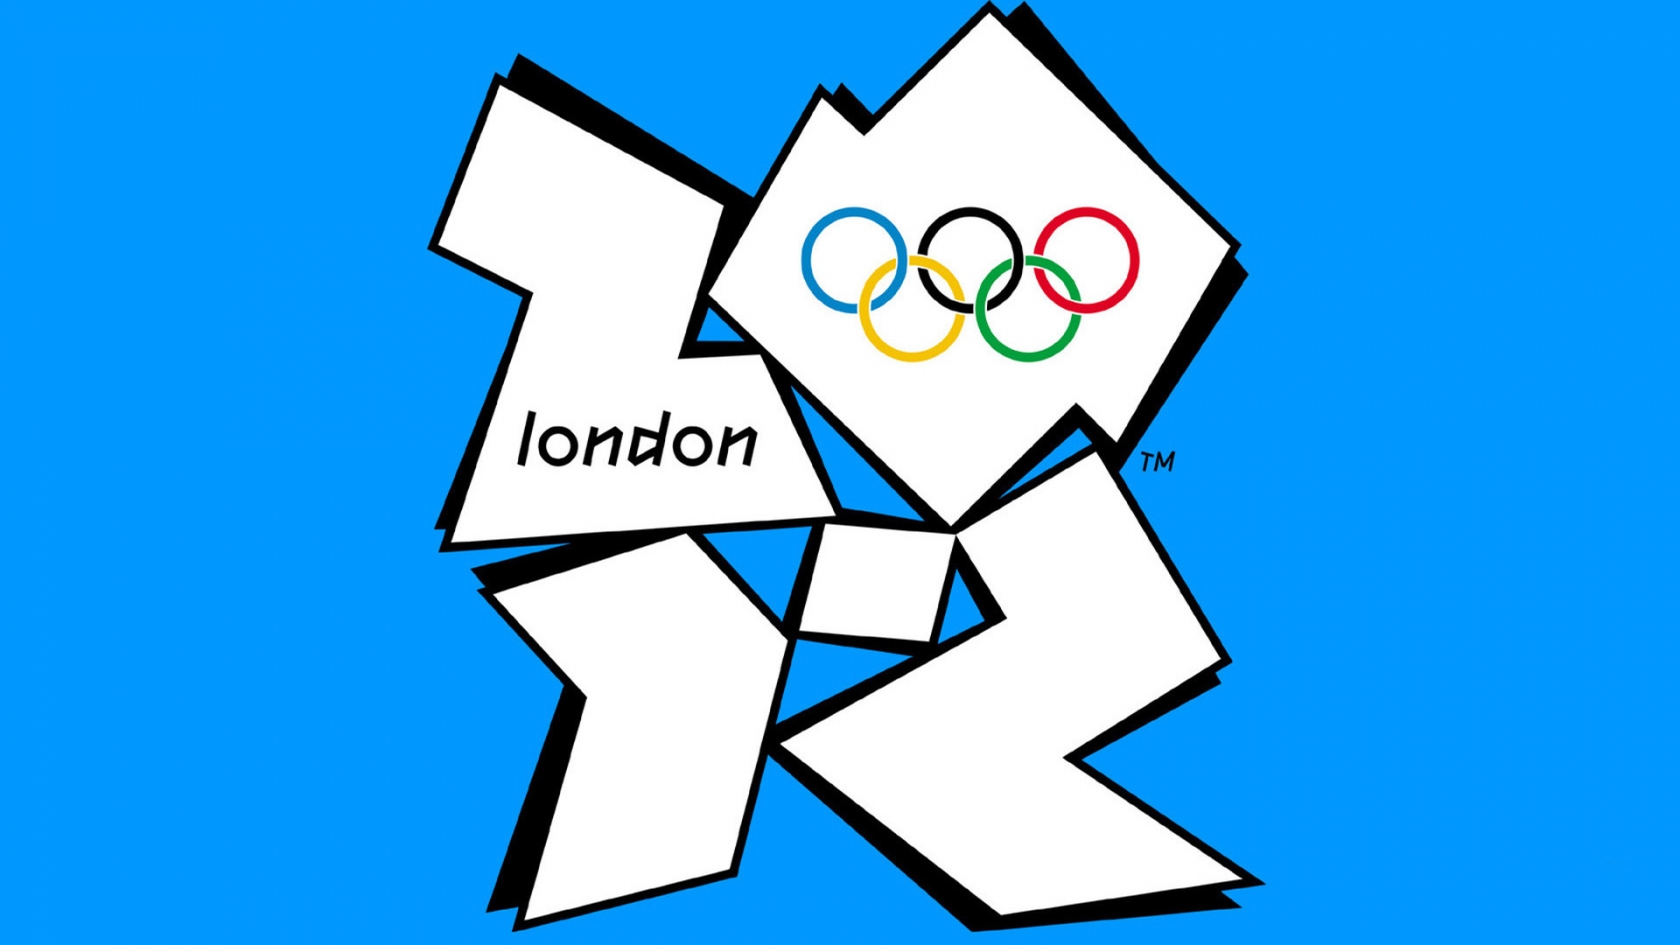 London 2012 Olympics Logo for 1680 x 945 HDTV resolution